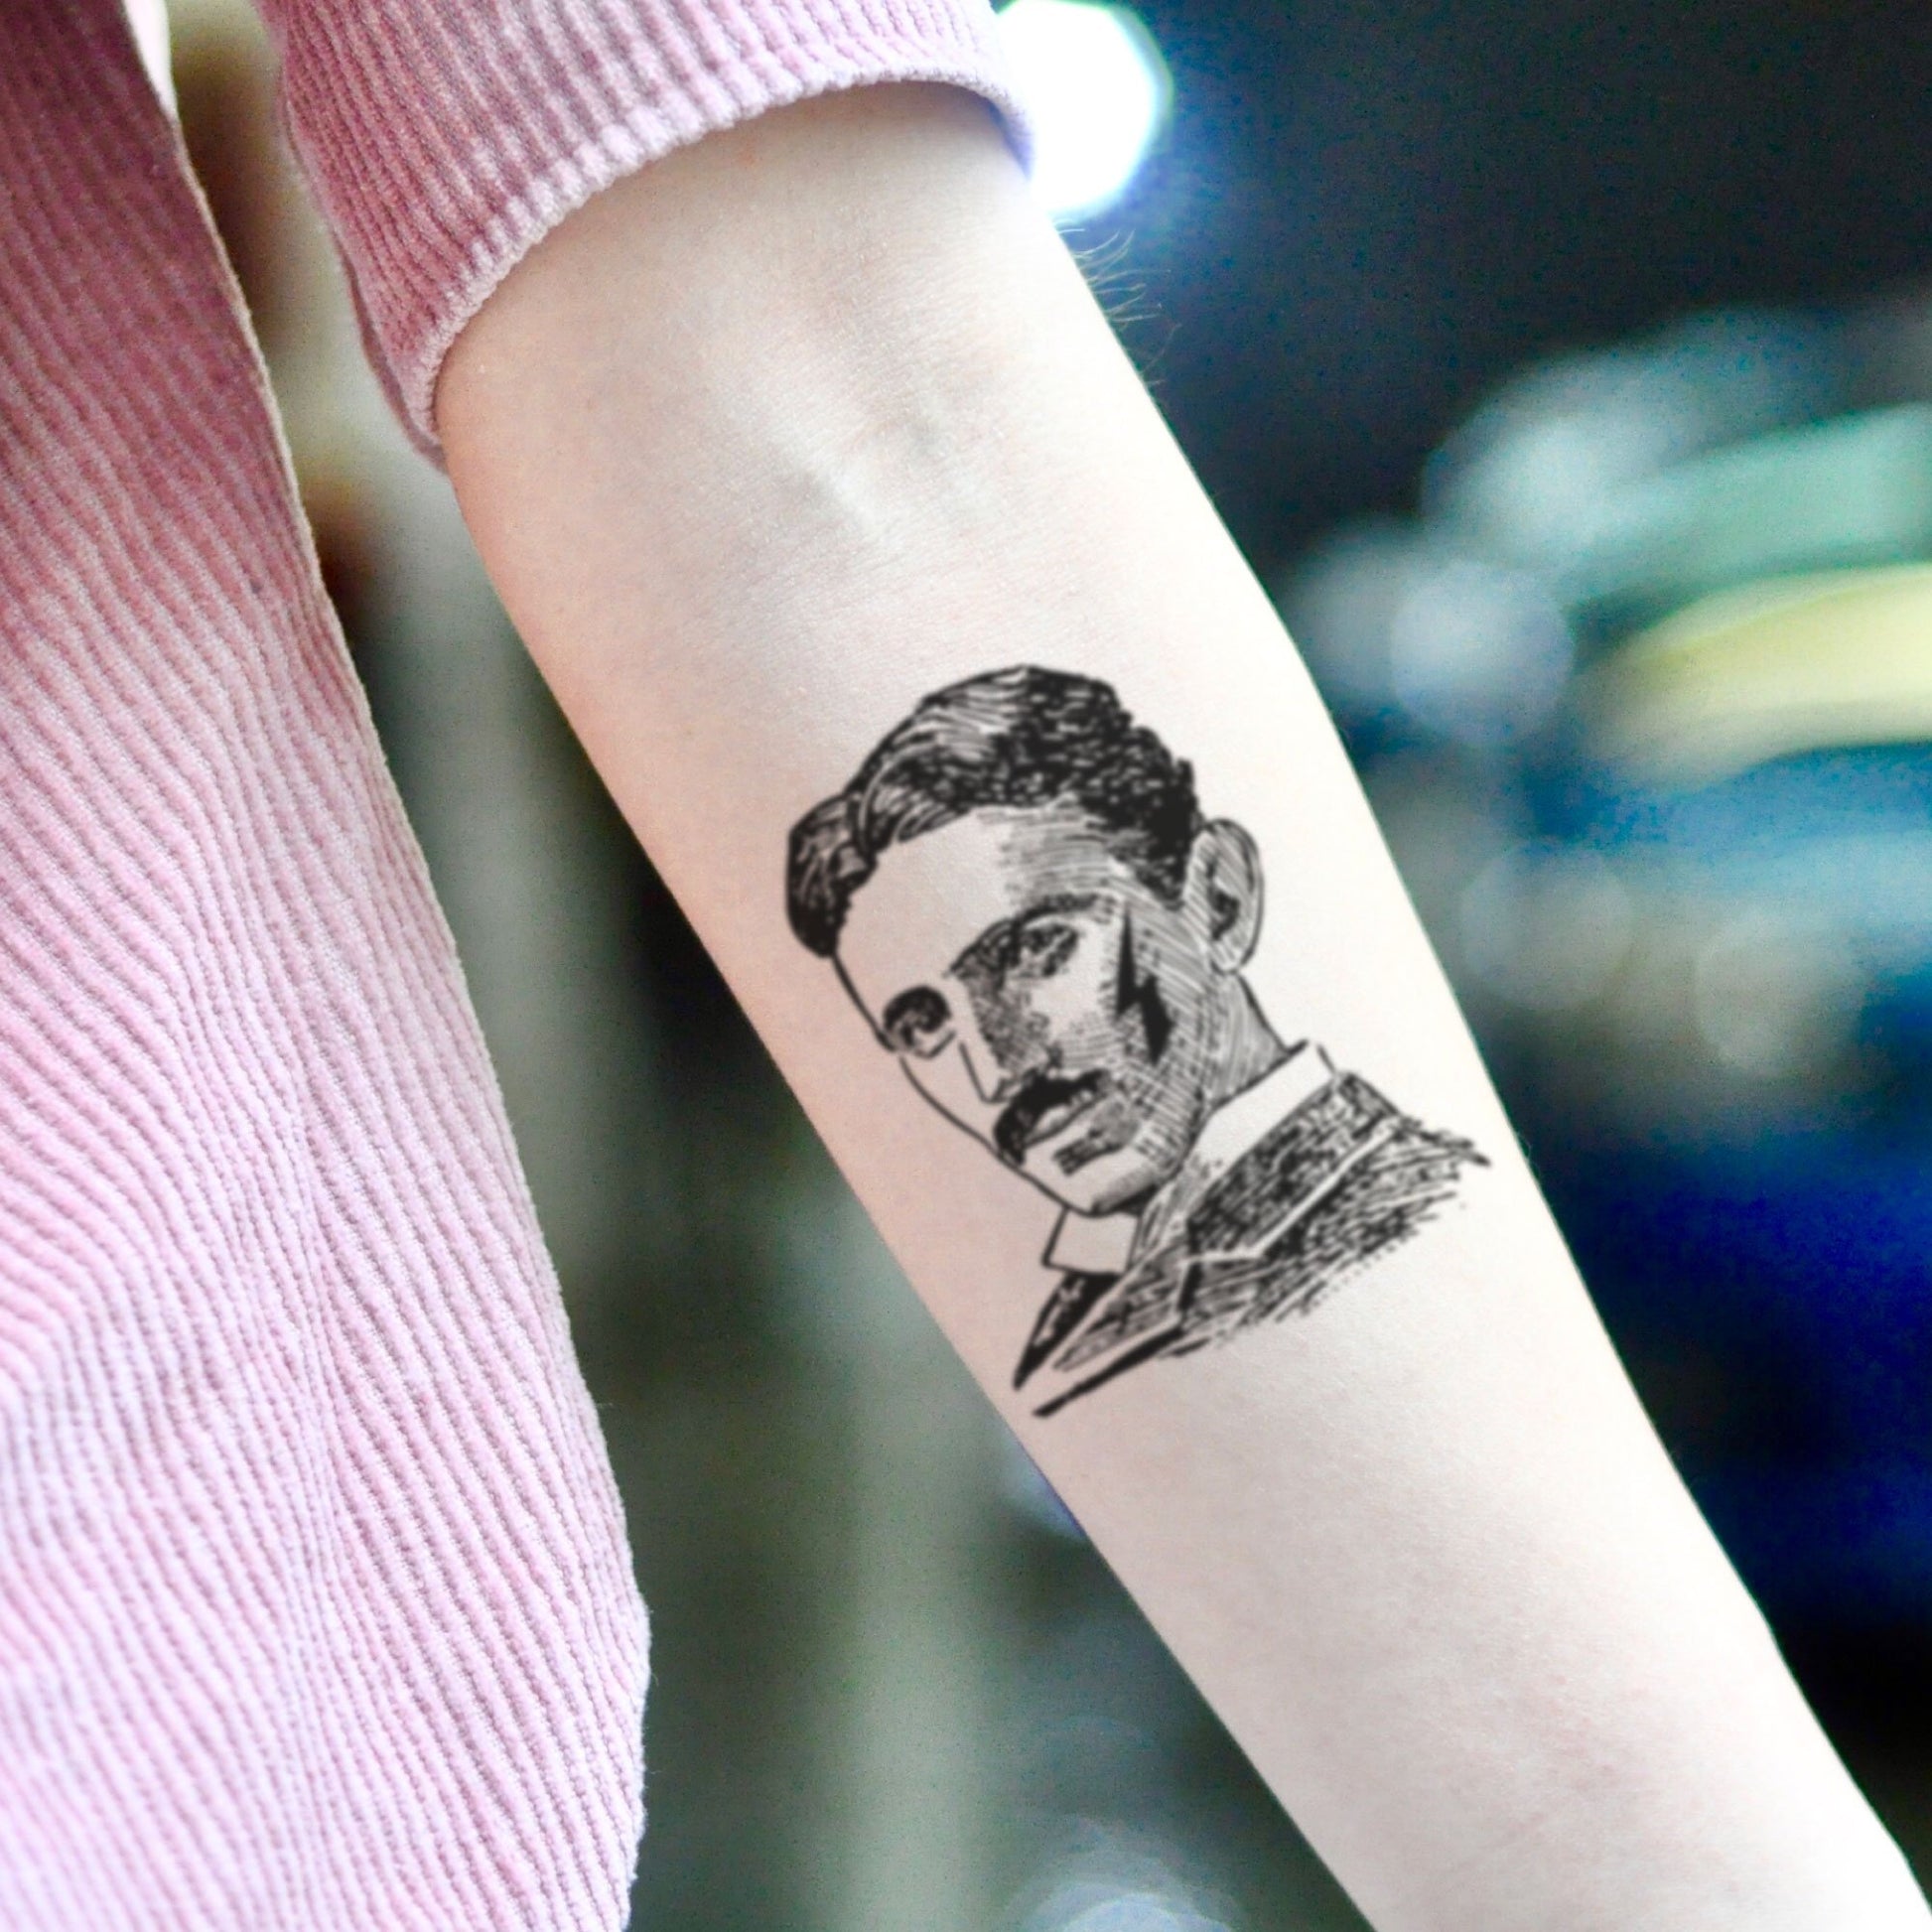 fake small nikola tesla portrait temporary tattoo sticker design idea on inner arm